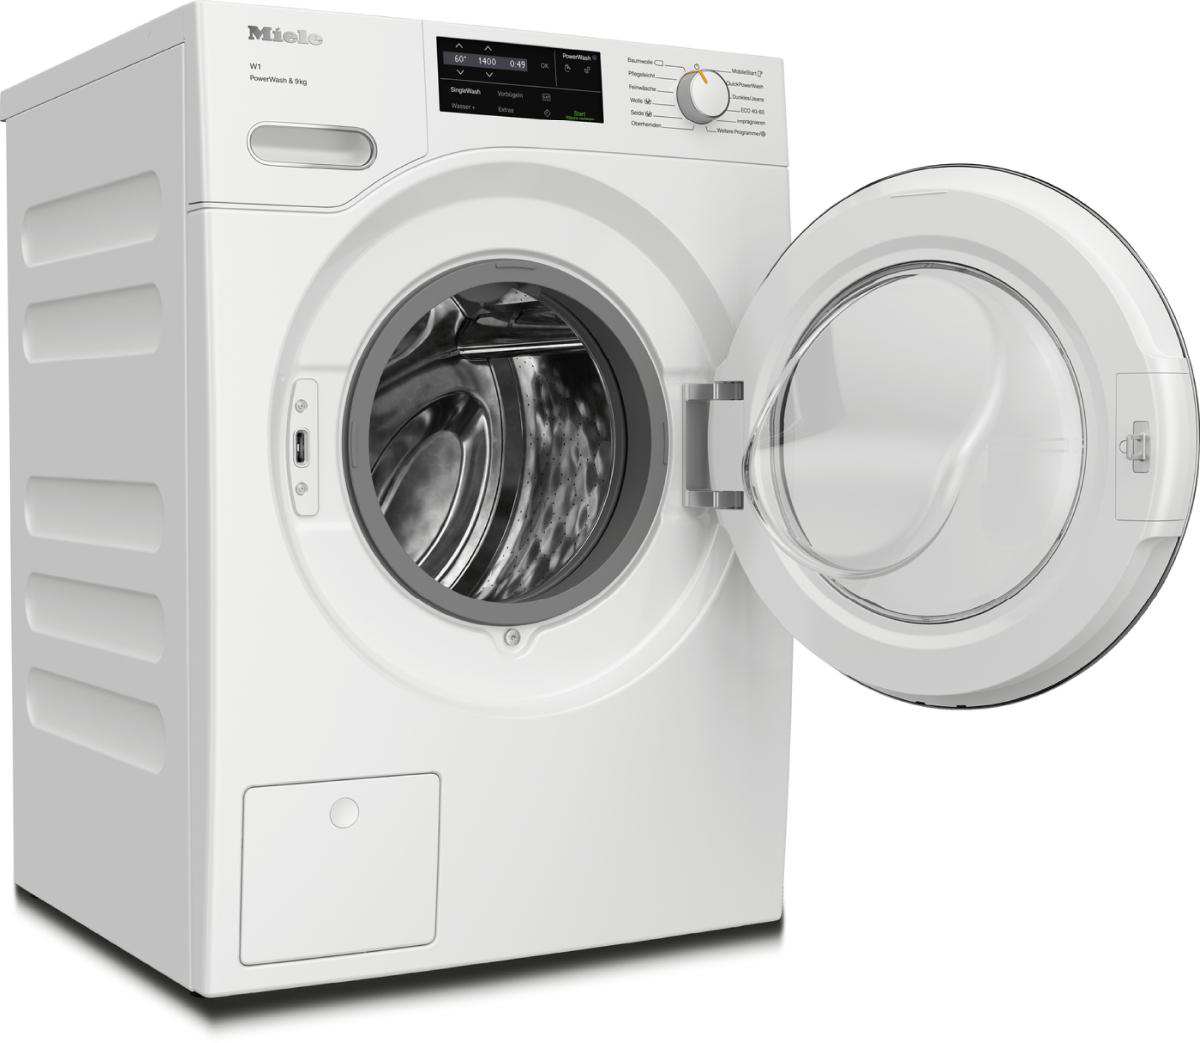 (9 W1 1400 A, WWG360 Flusenfilter, MIELE Waschmaschine Fremdkörperfilter.) WPS PWash&9kg kg, Edition U/Min., White